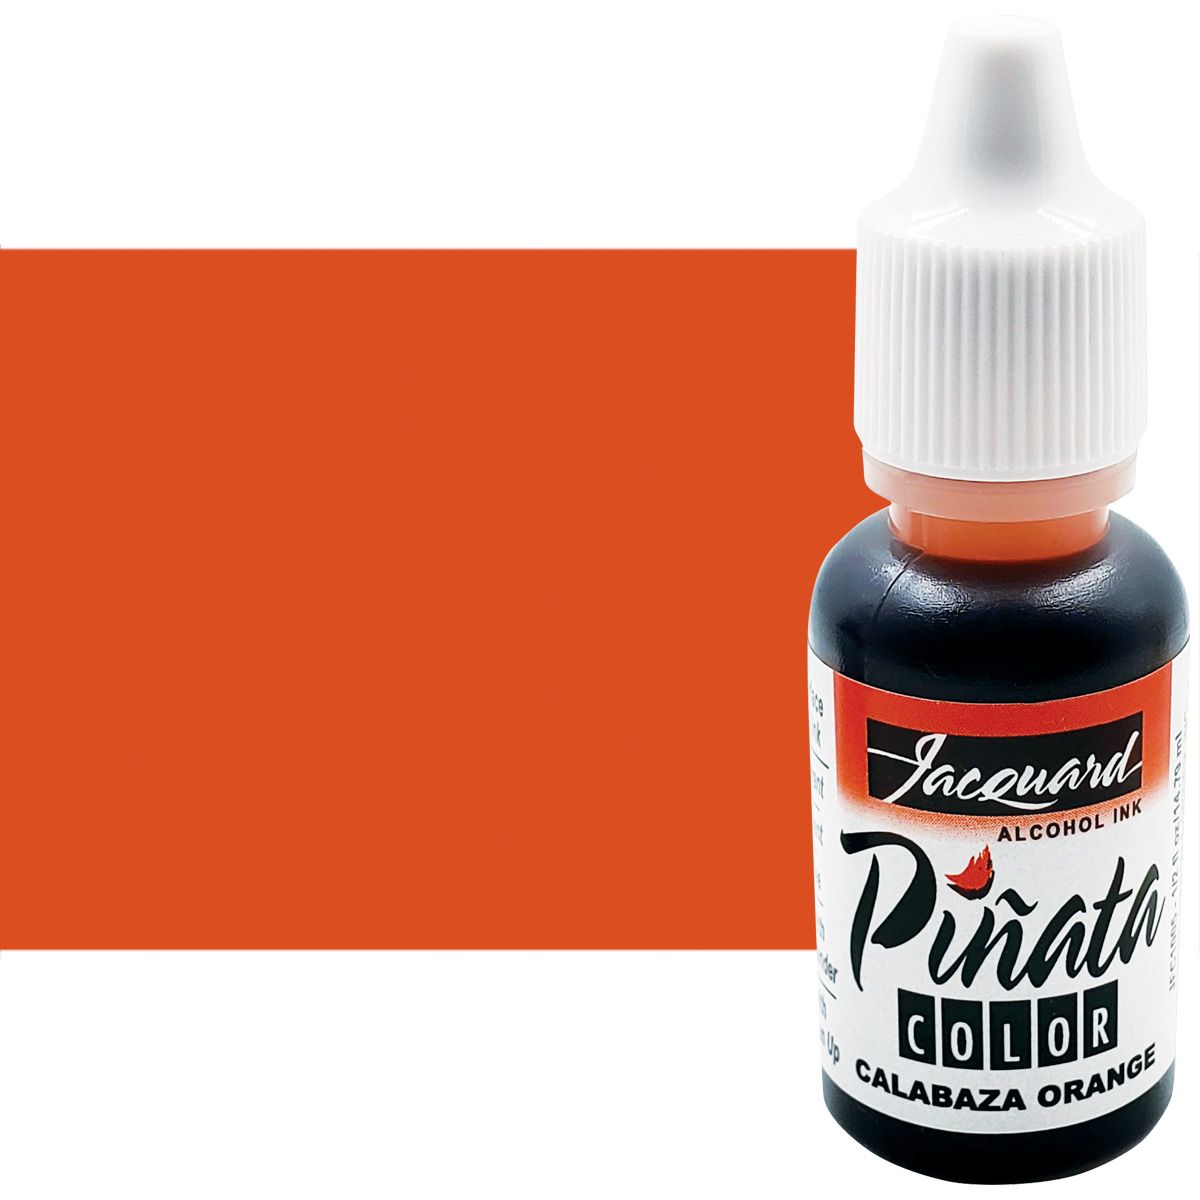 Jacquard Pinata Alcohol Ink - Calabaza Orange, 1/2oz